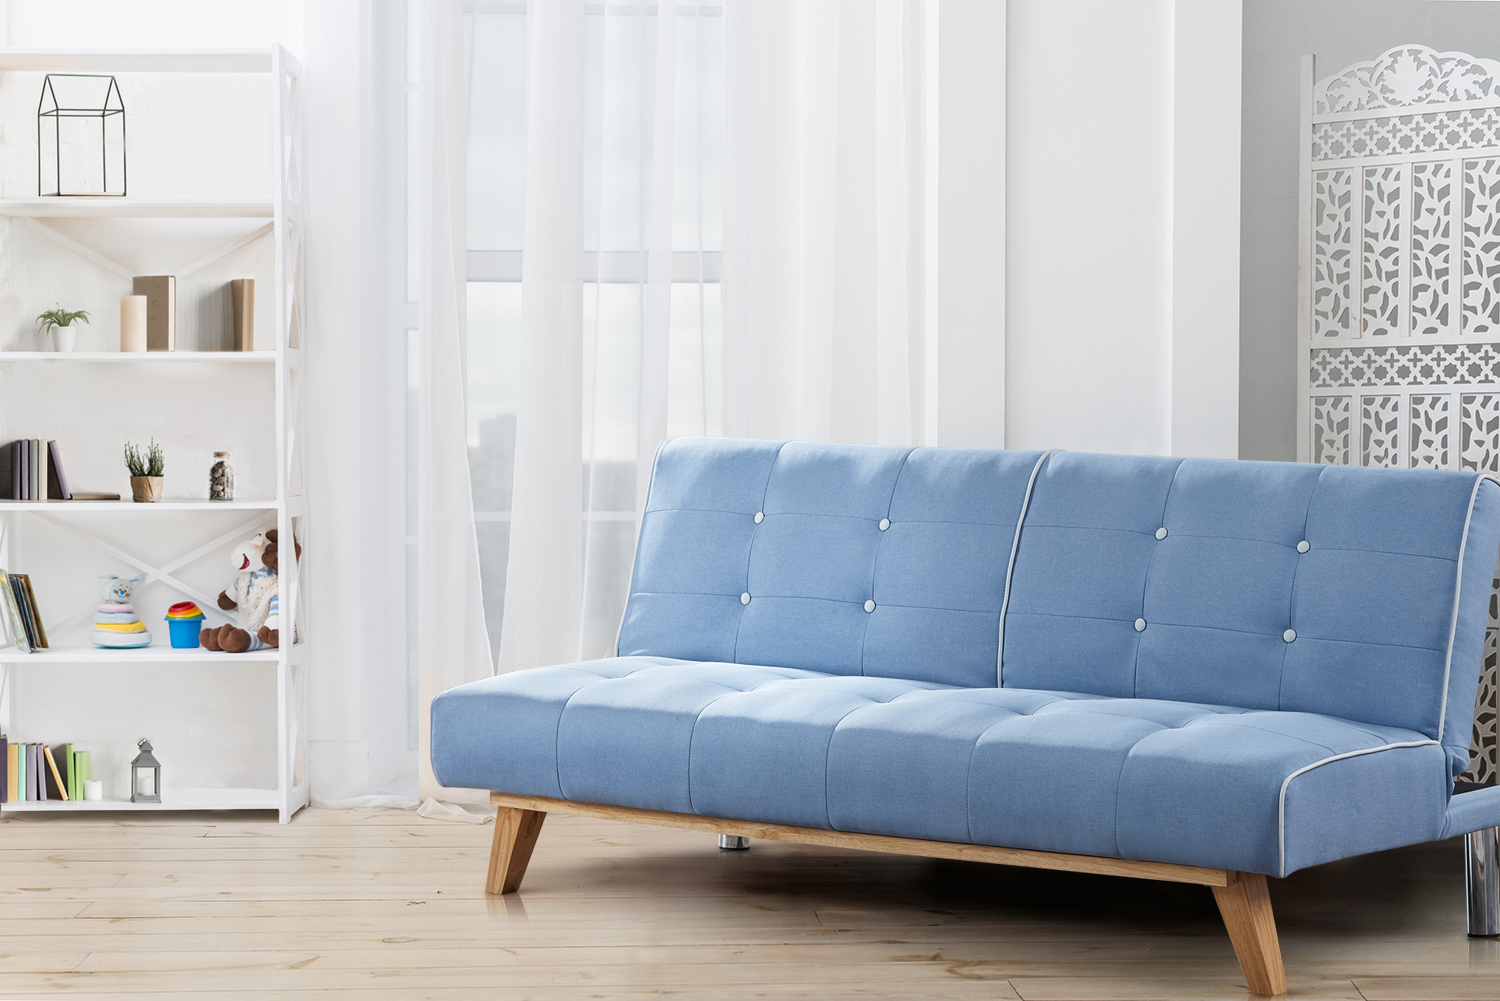 italian venice style fabric sofa bed